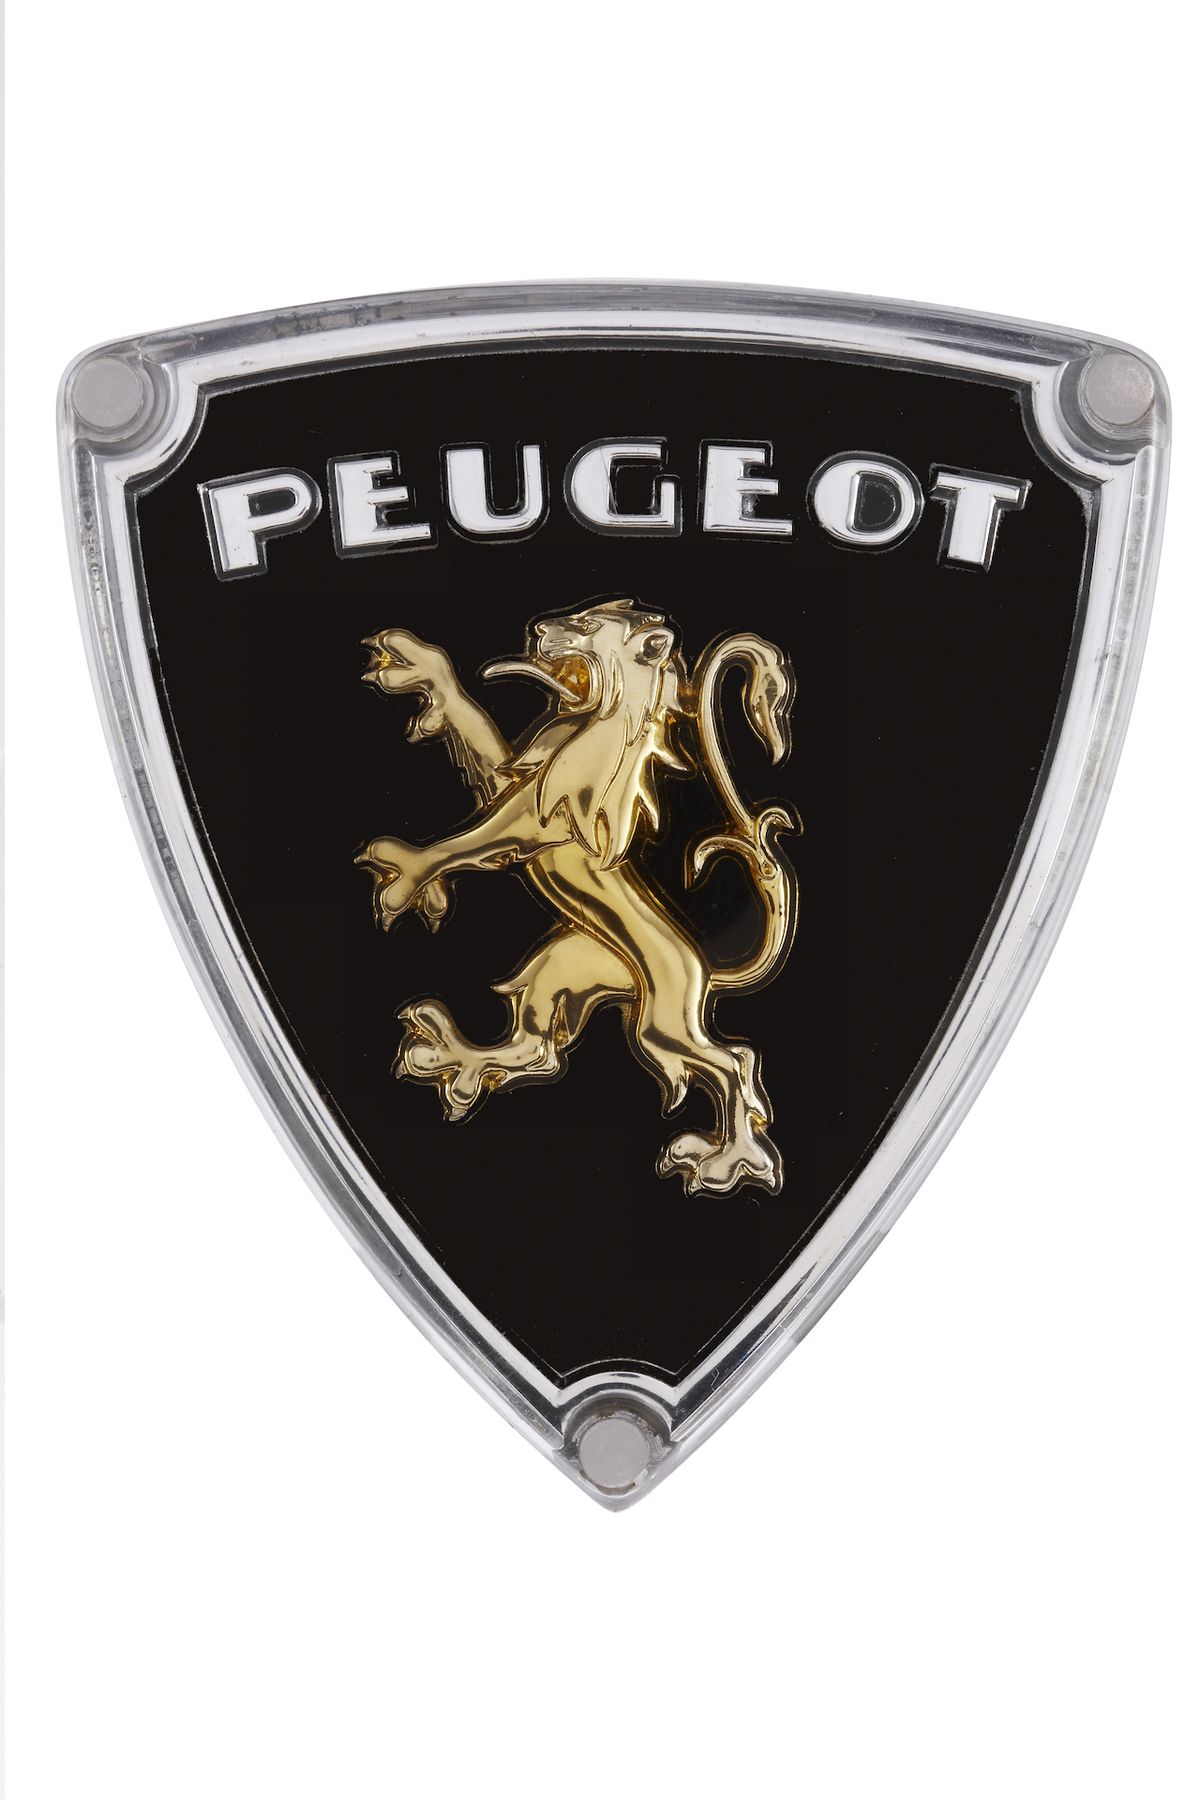 Logo Peugeotu v roce 1950